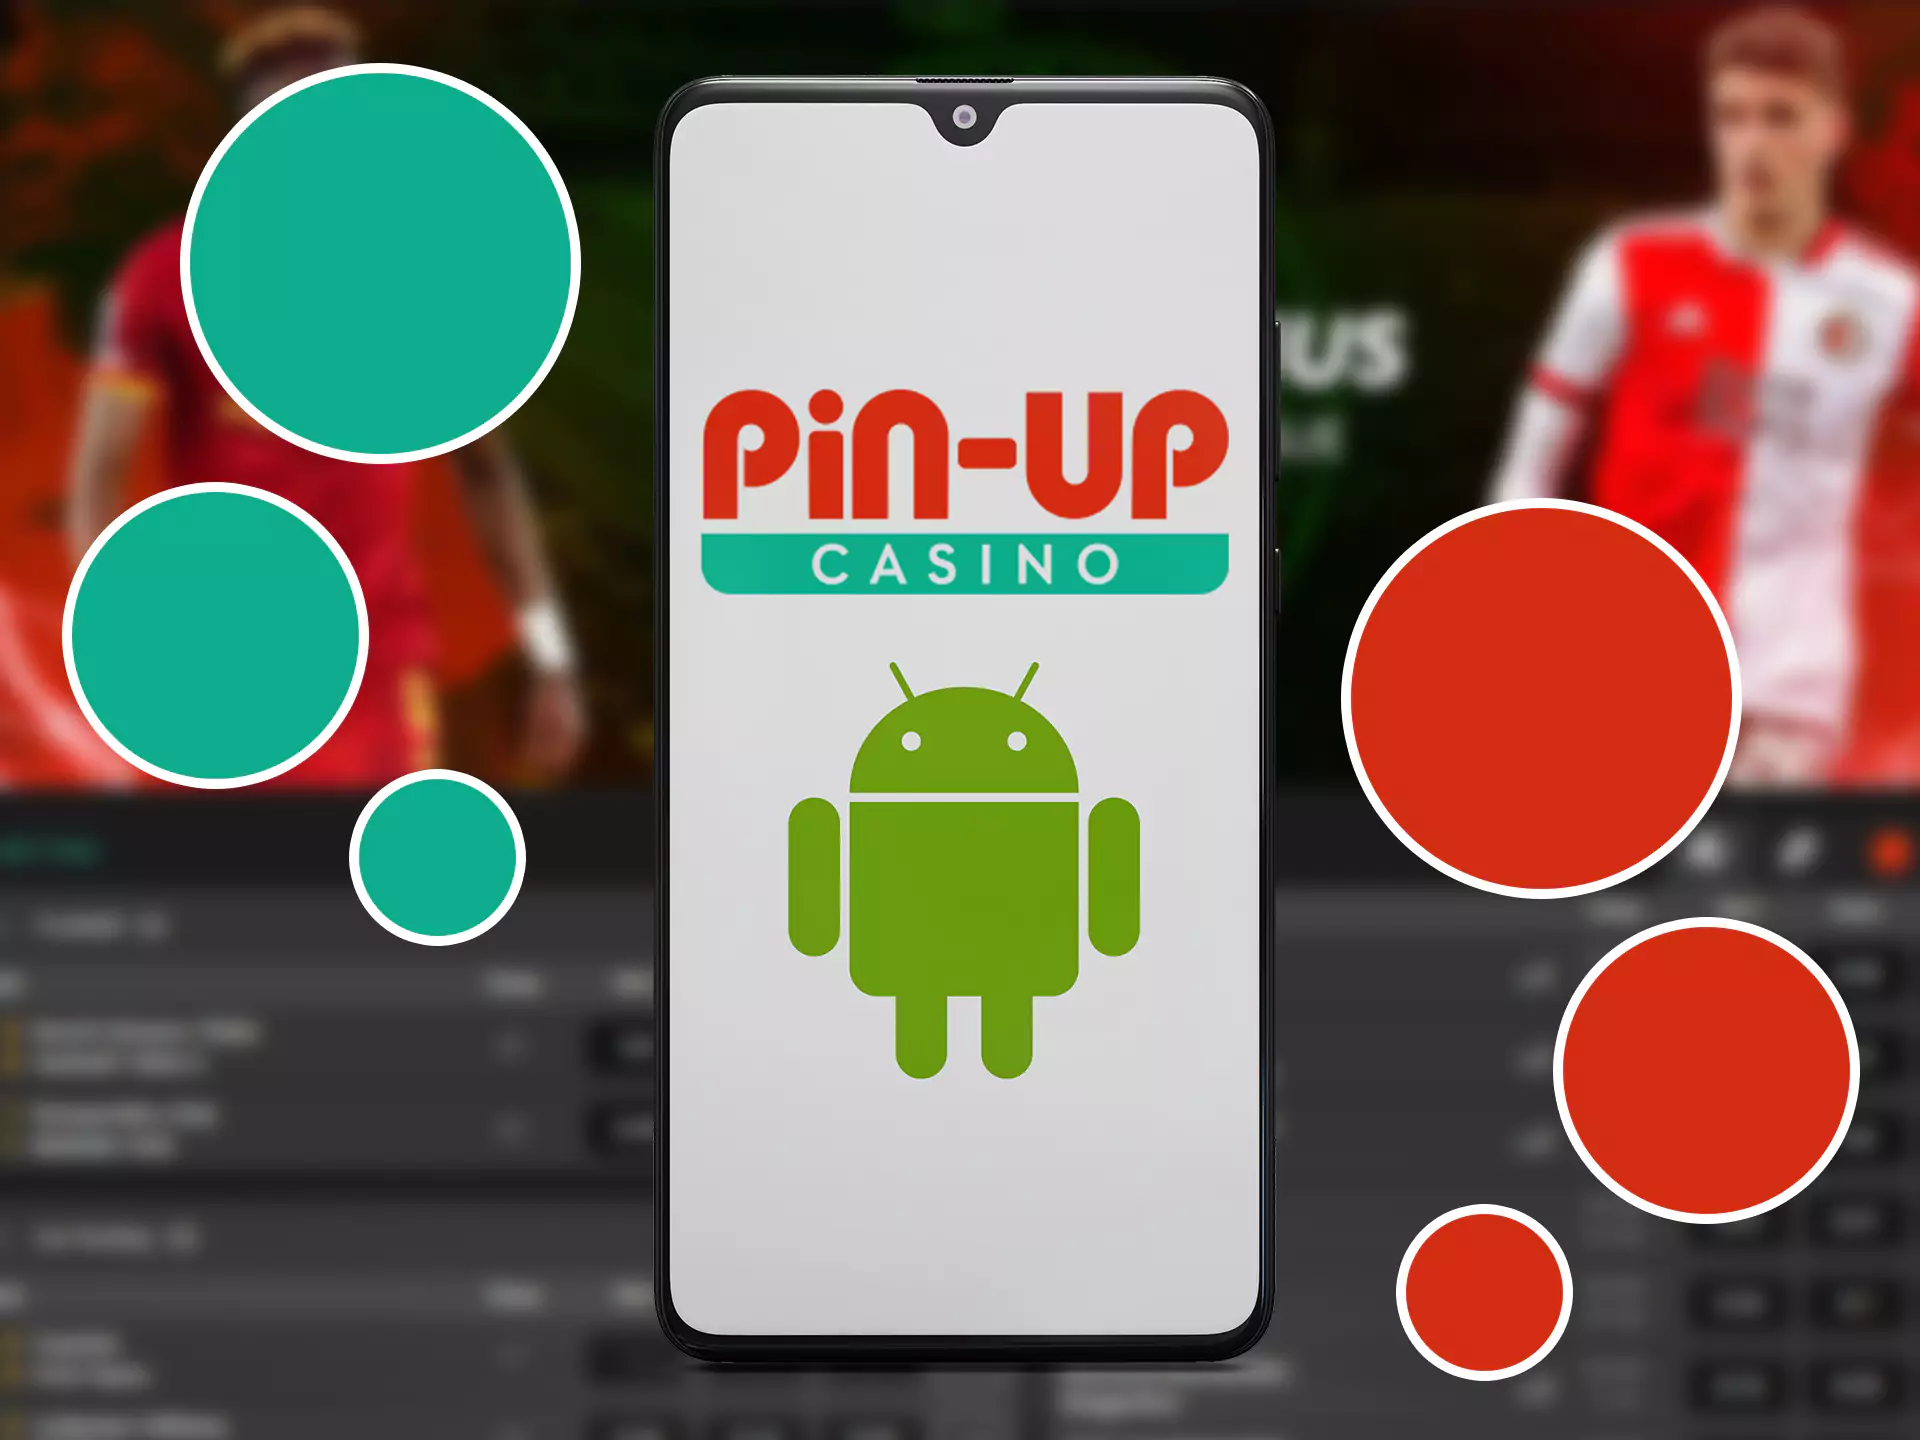 Pin-up Dodatka Pidtrimentrim Nuibilsh Android-побудова